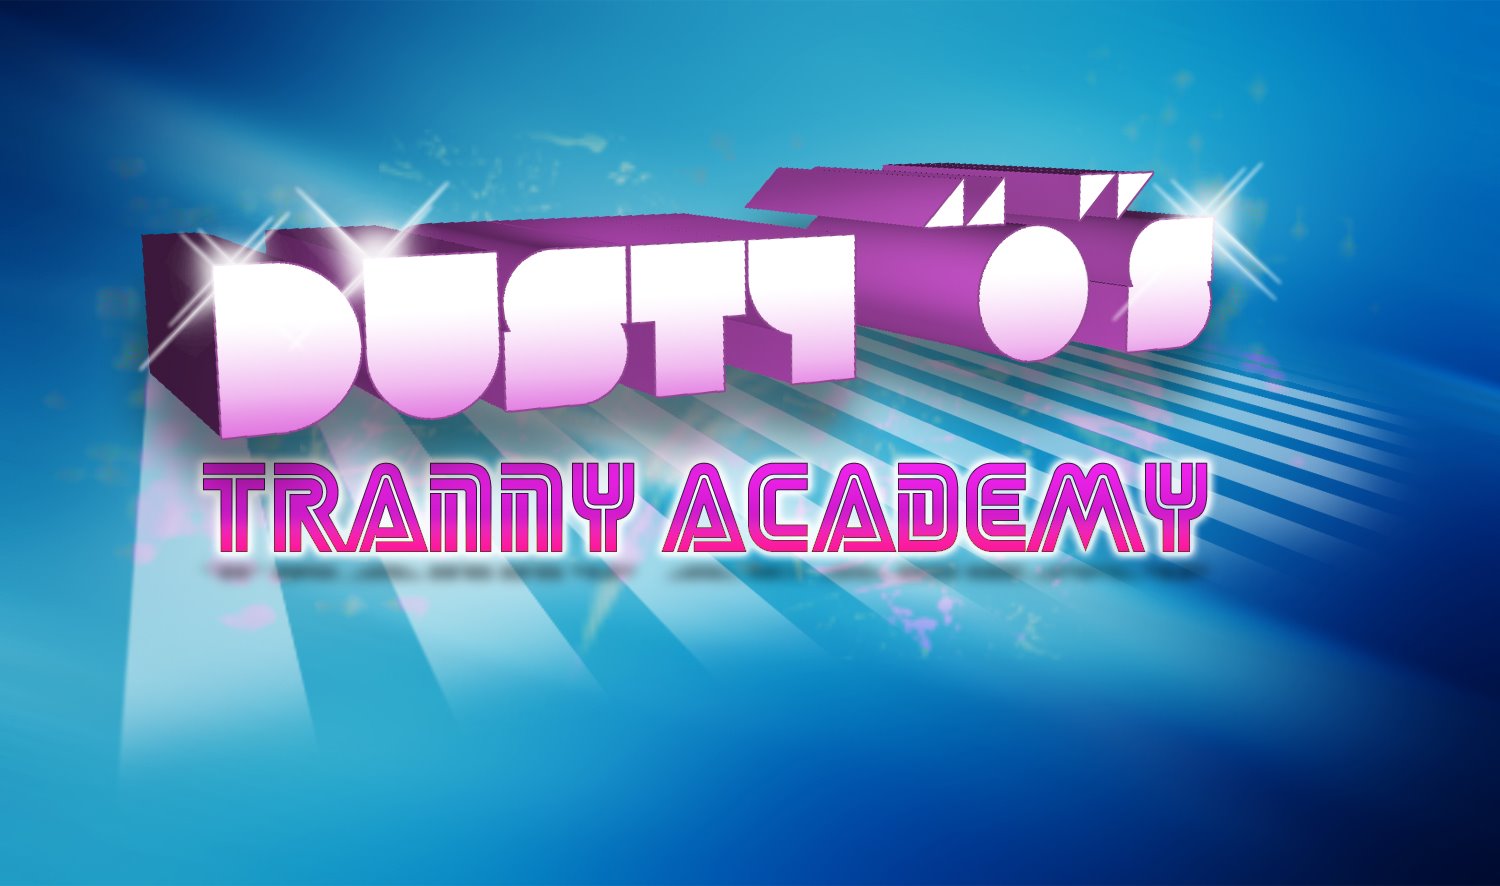 Dusty “O” Opens The Doors Of Tranny Academy